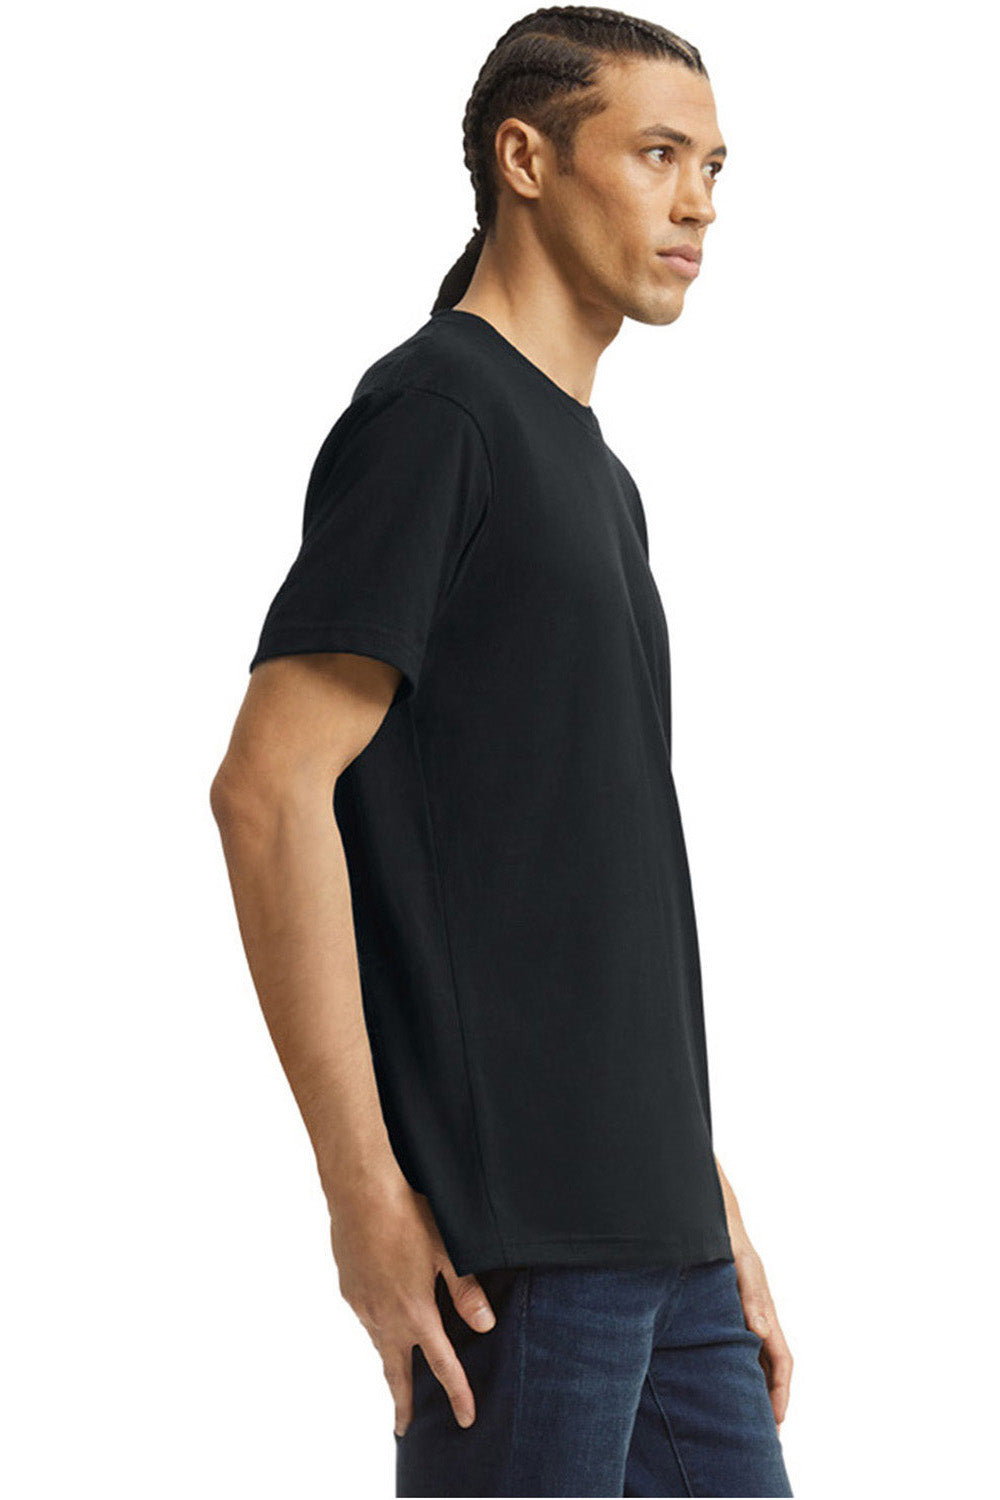 American Apparel 2001CVC Mens CVC Short Sleeve Crewneck T-Shirt Black Model Side